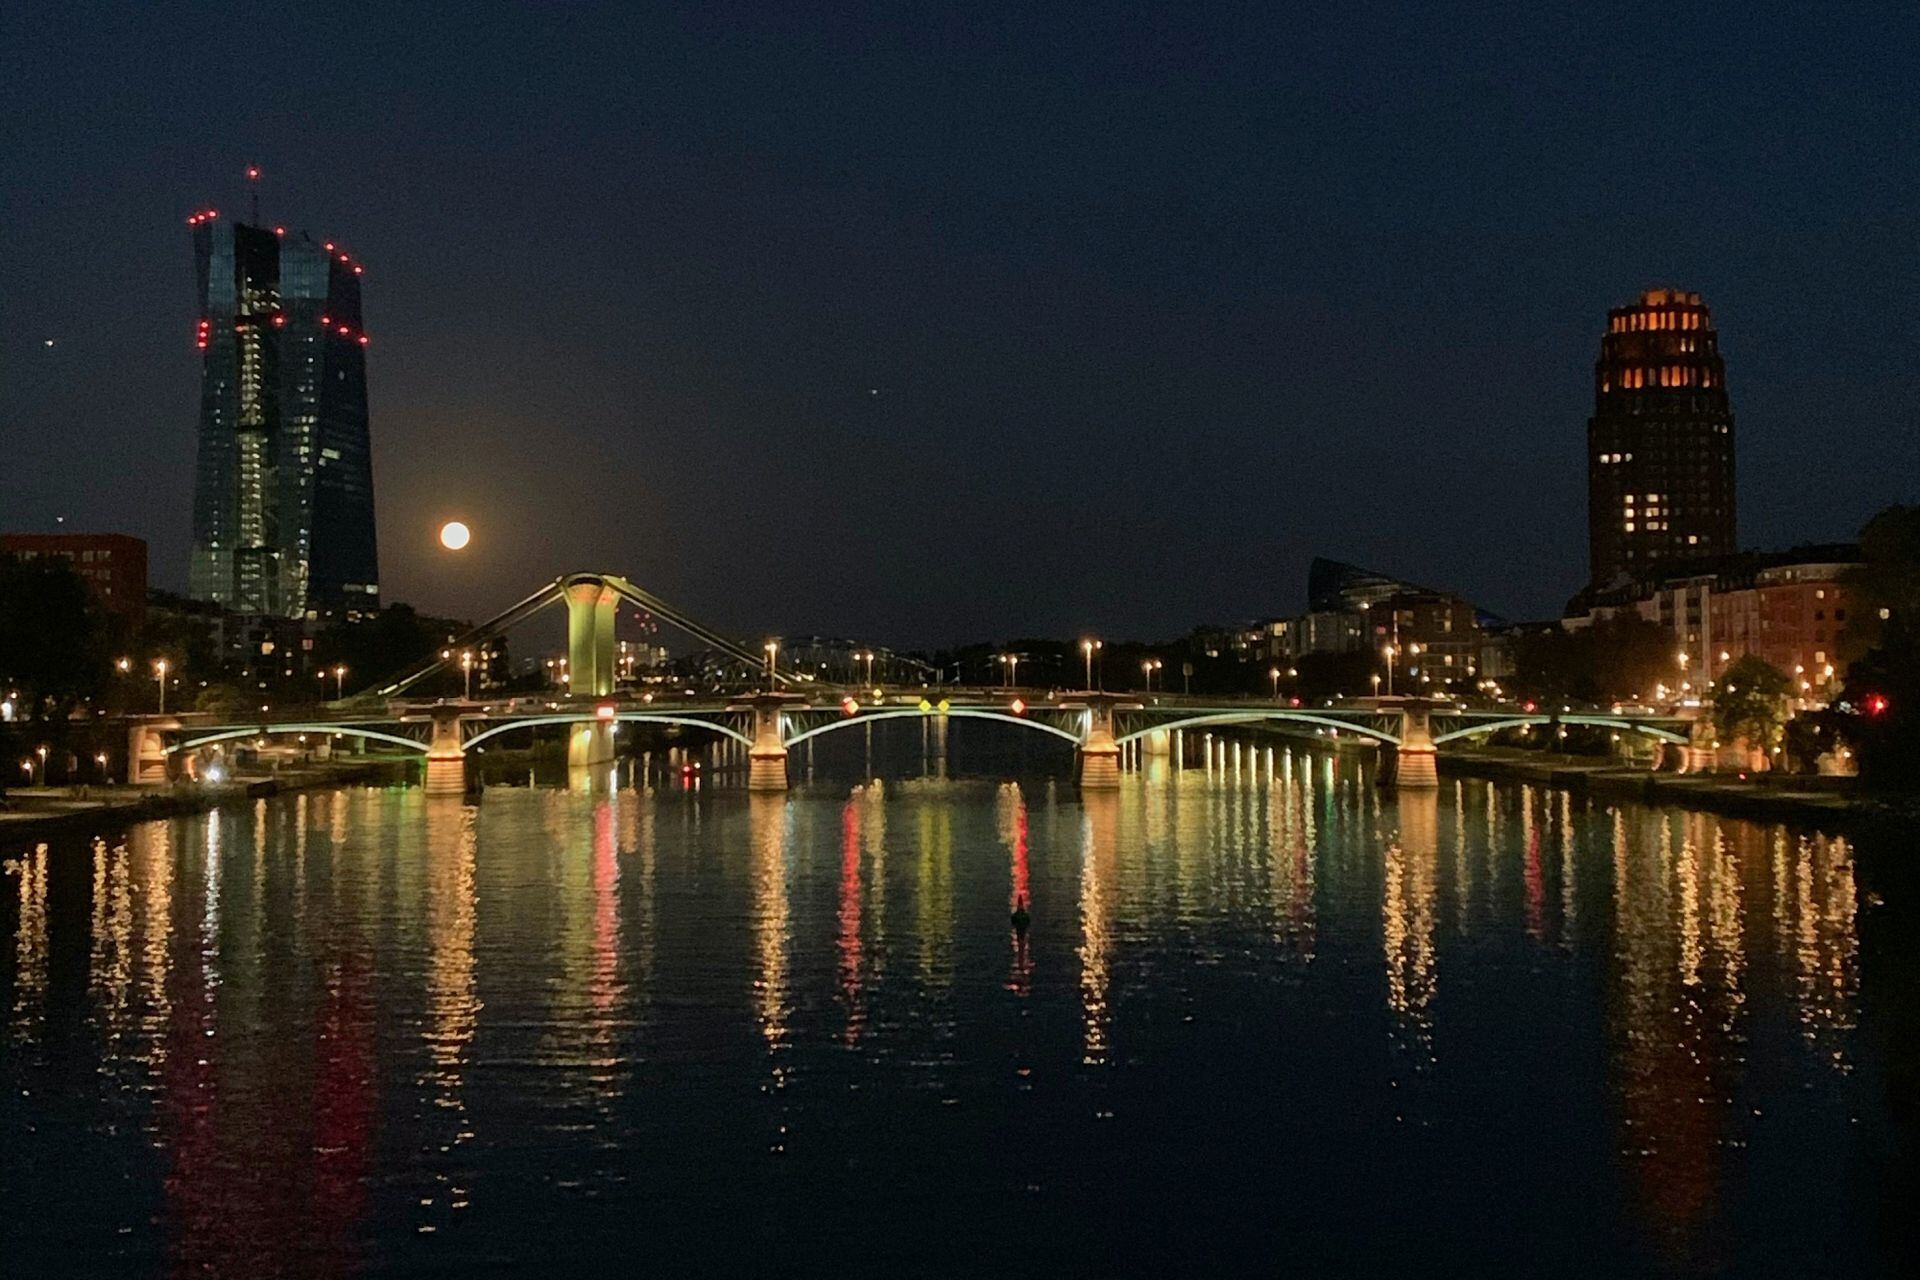 Frankfurt de noche.